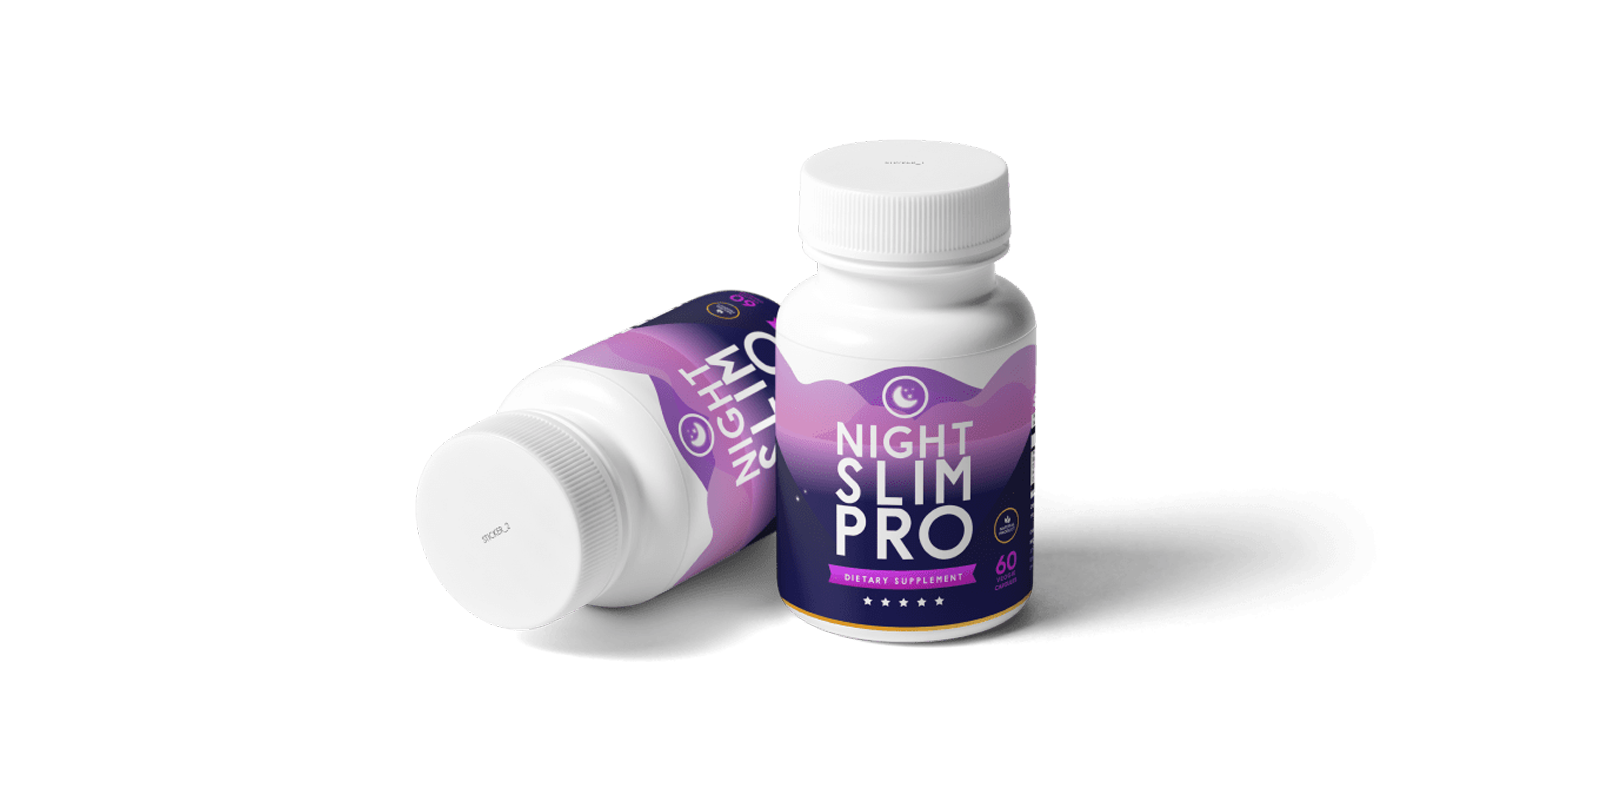 Night Slim Pro review